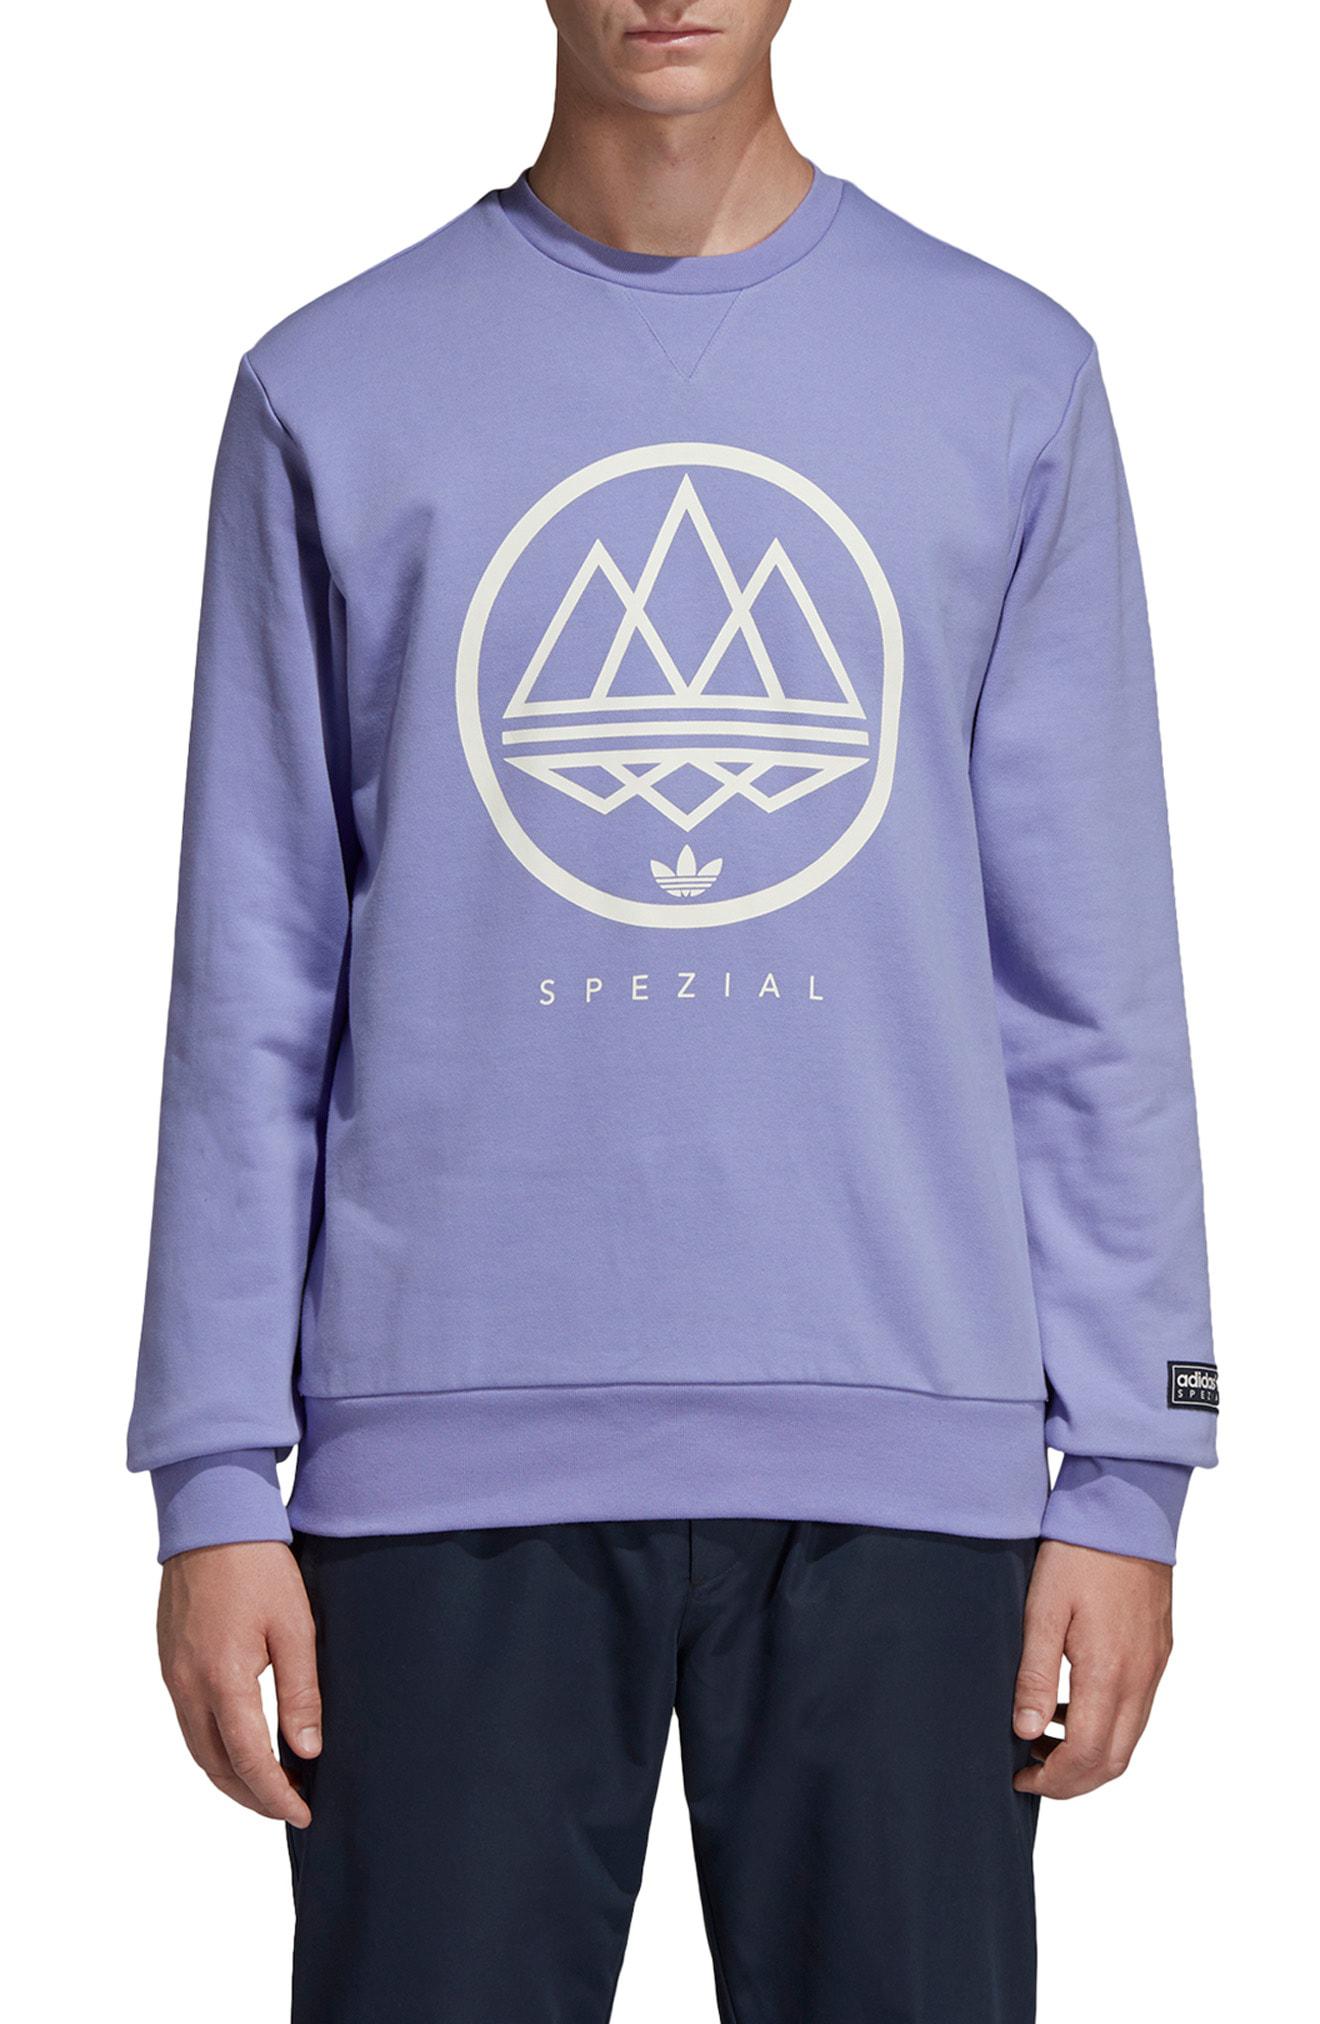 Adidas Spezial Purple Sweatshirt Online Sale, UP TO 68% OFF